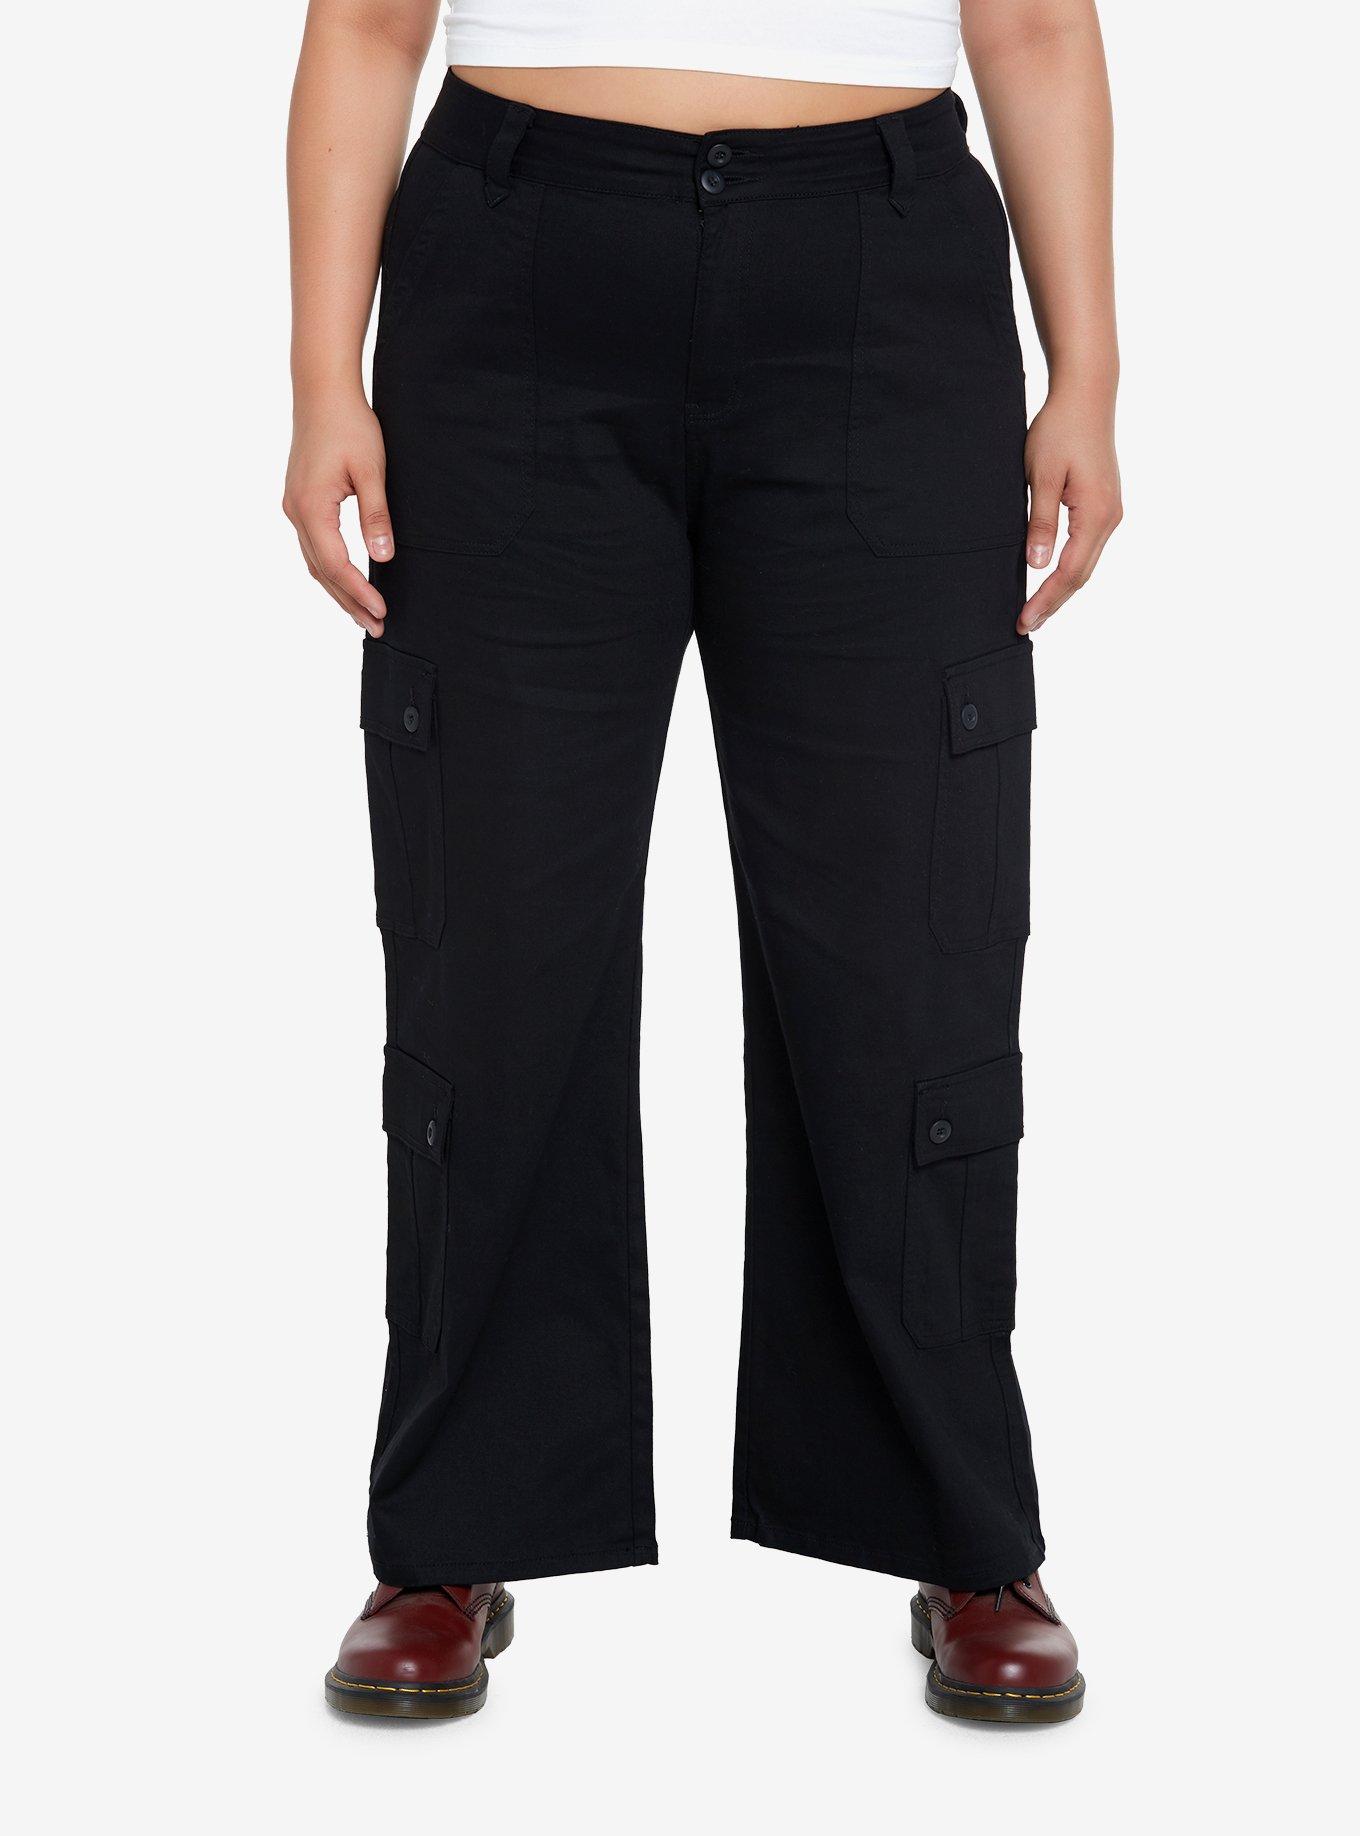 Social Collision Black Double Pocket Cargo Pants Plus Size | Hot Topic